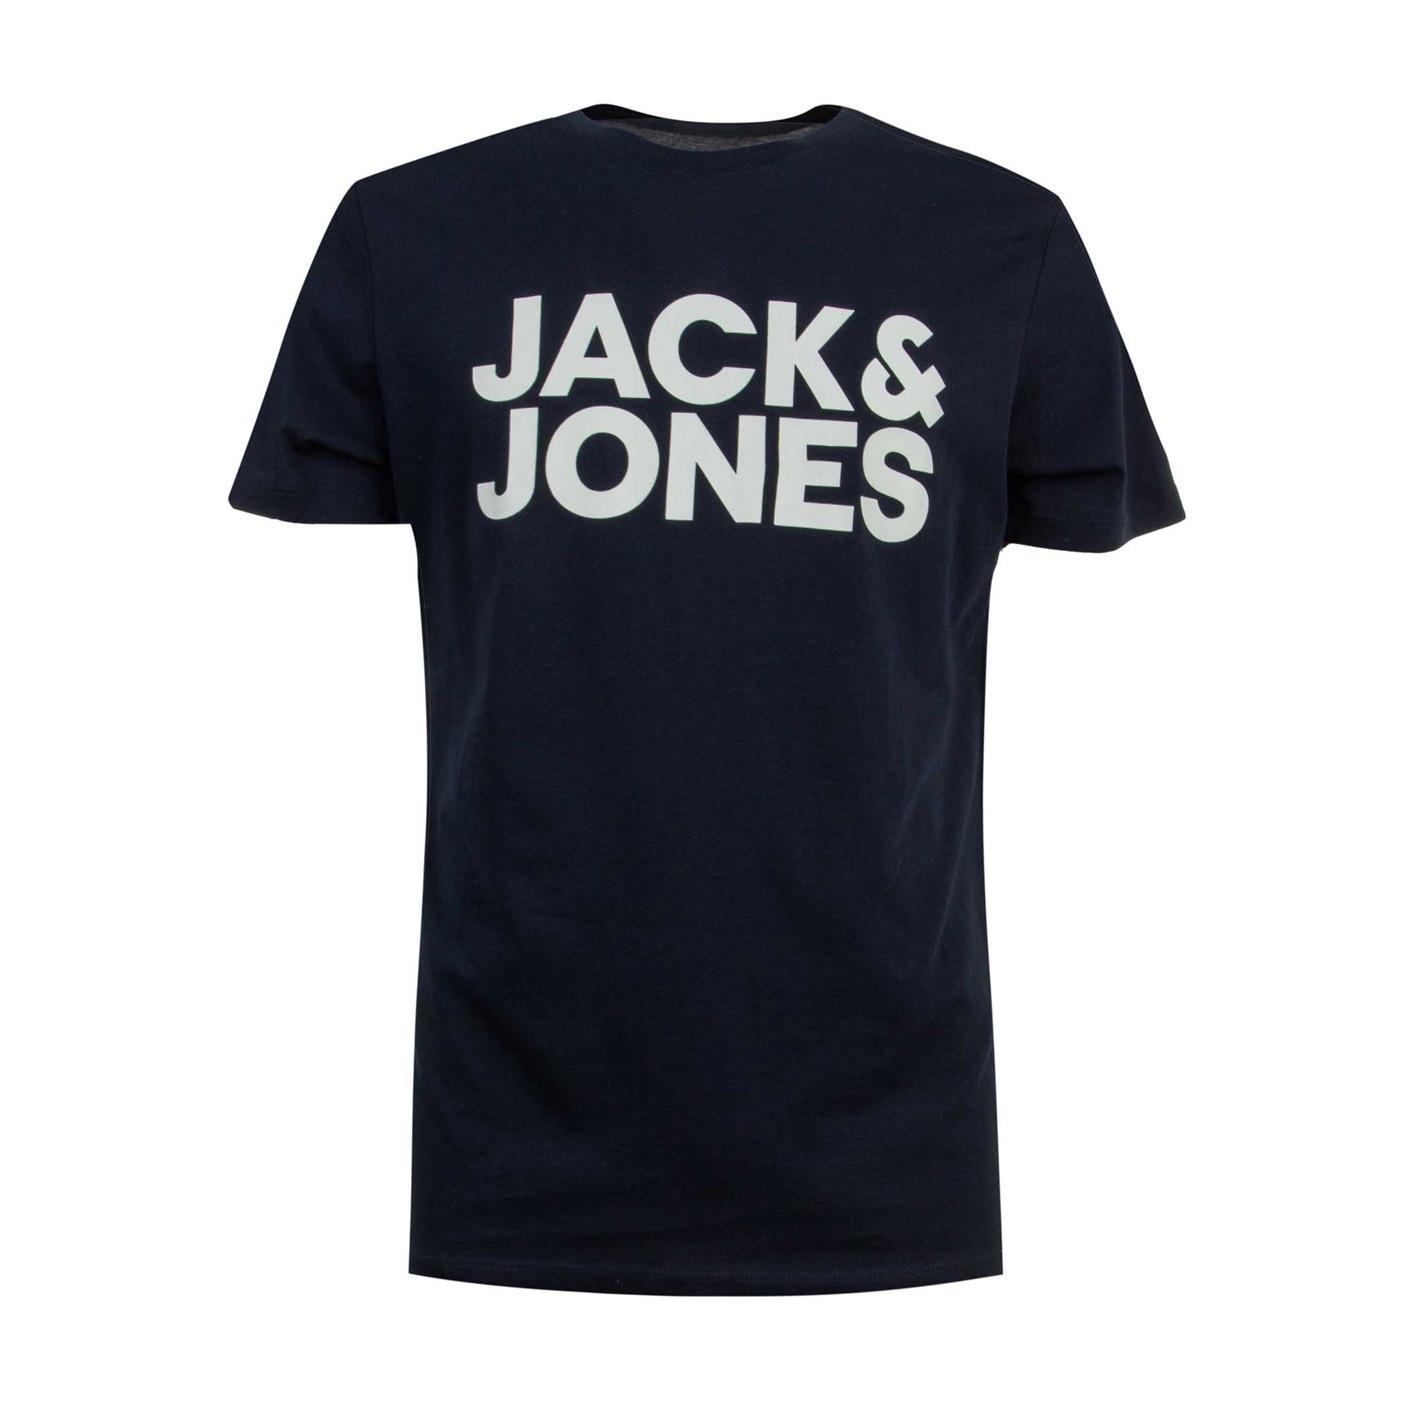 Jack & Jones - Jack & Jones Camiseta Hombre Clásica Azul Marino / 12151955 Navy